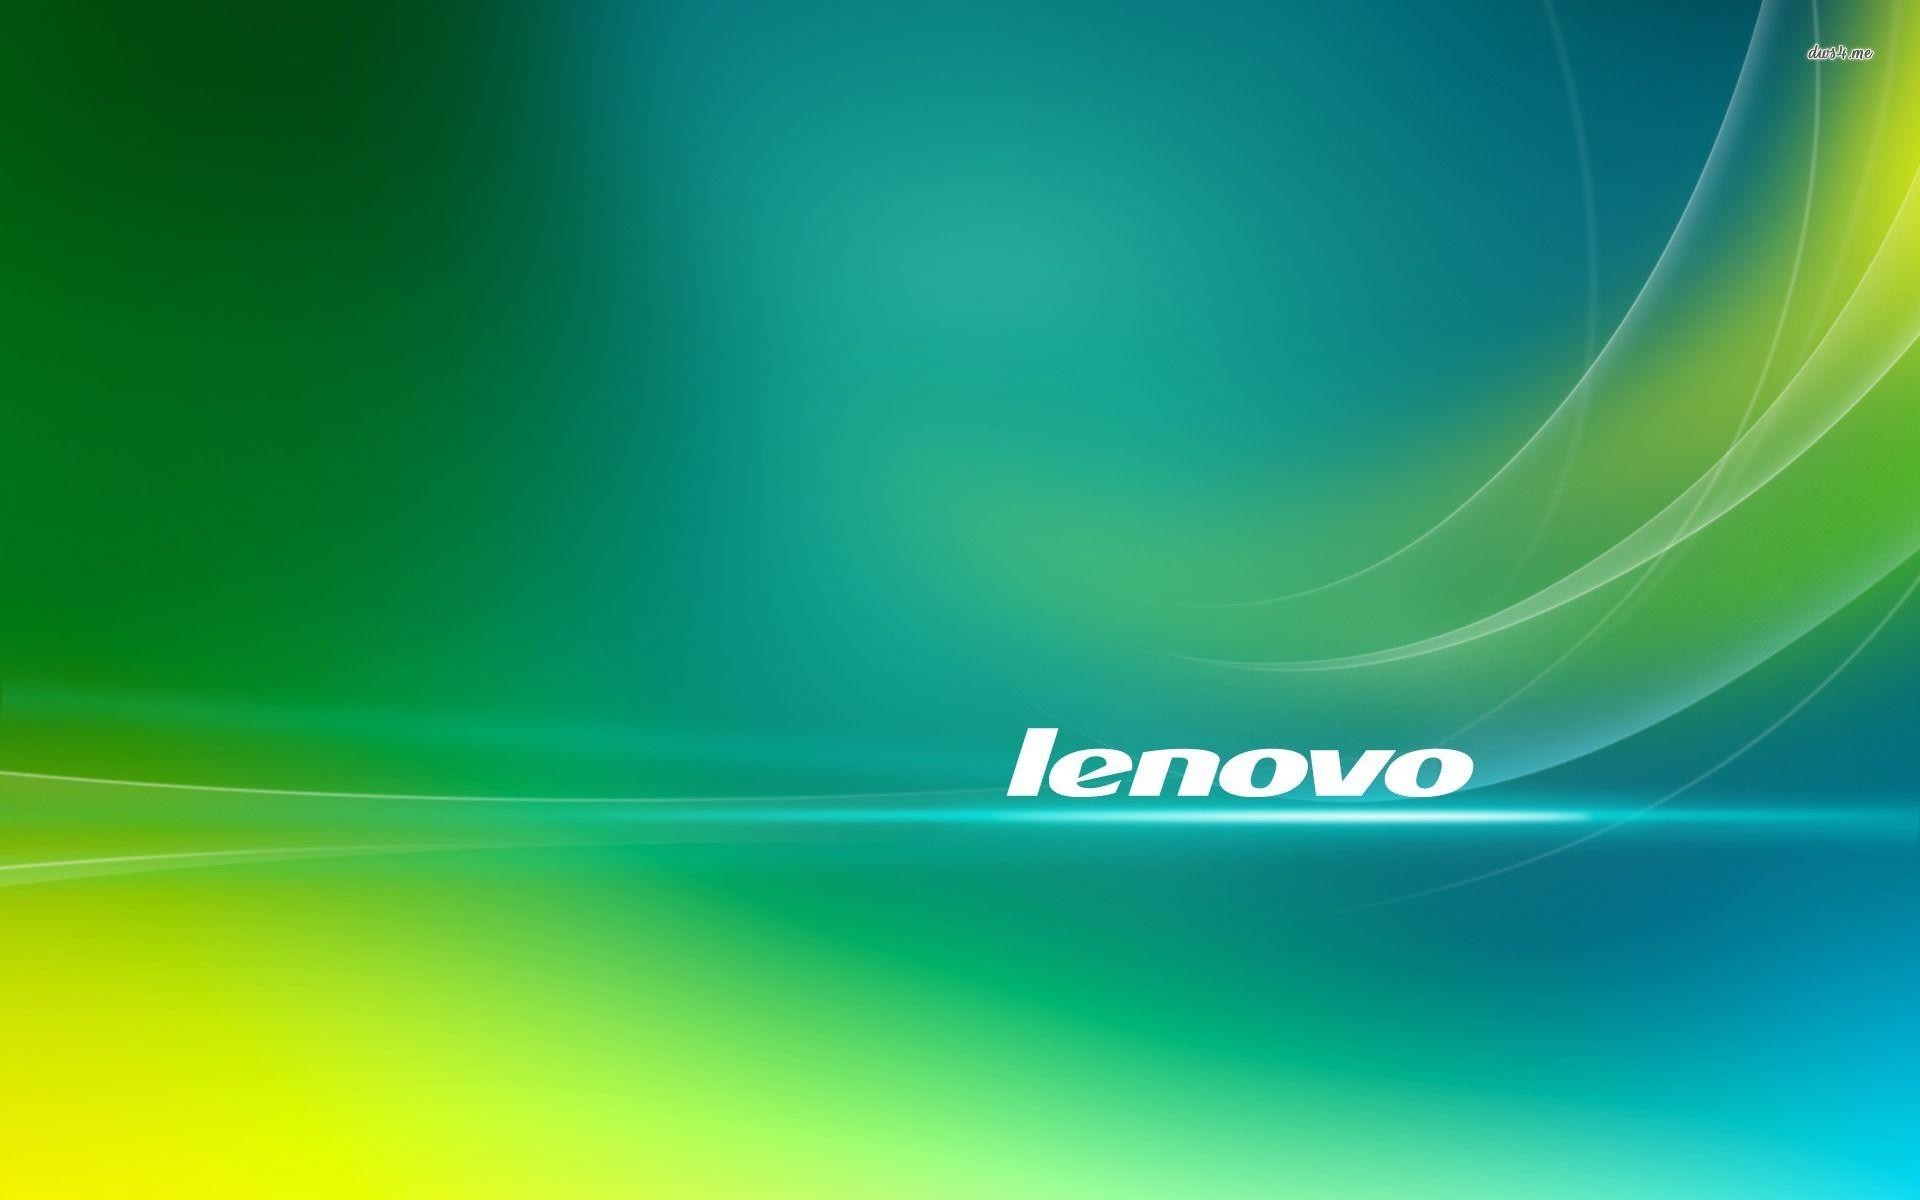 1920x1200 Lenovo Wallpapers - Full HD wallpaper search